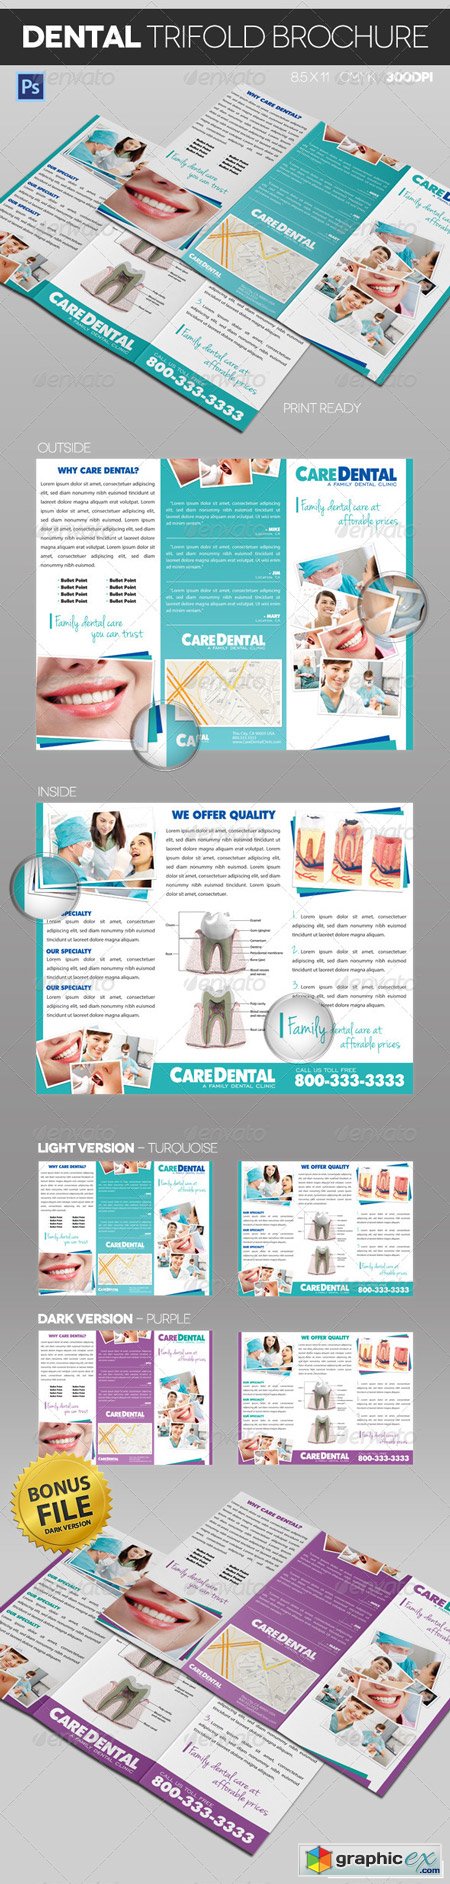 Dental Trifold Brochure